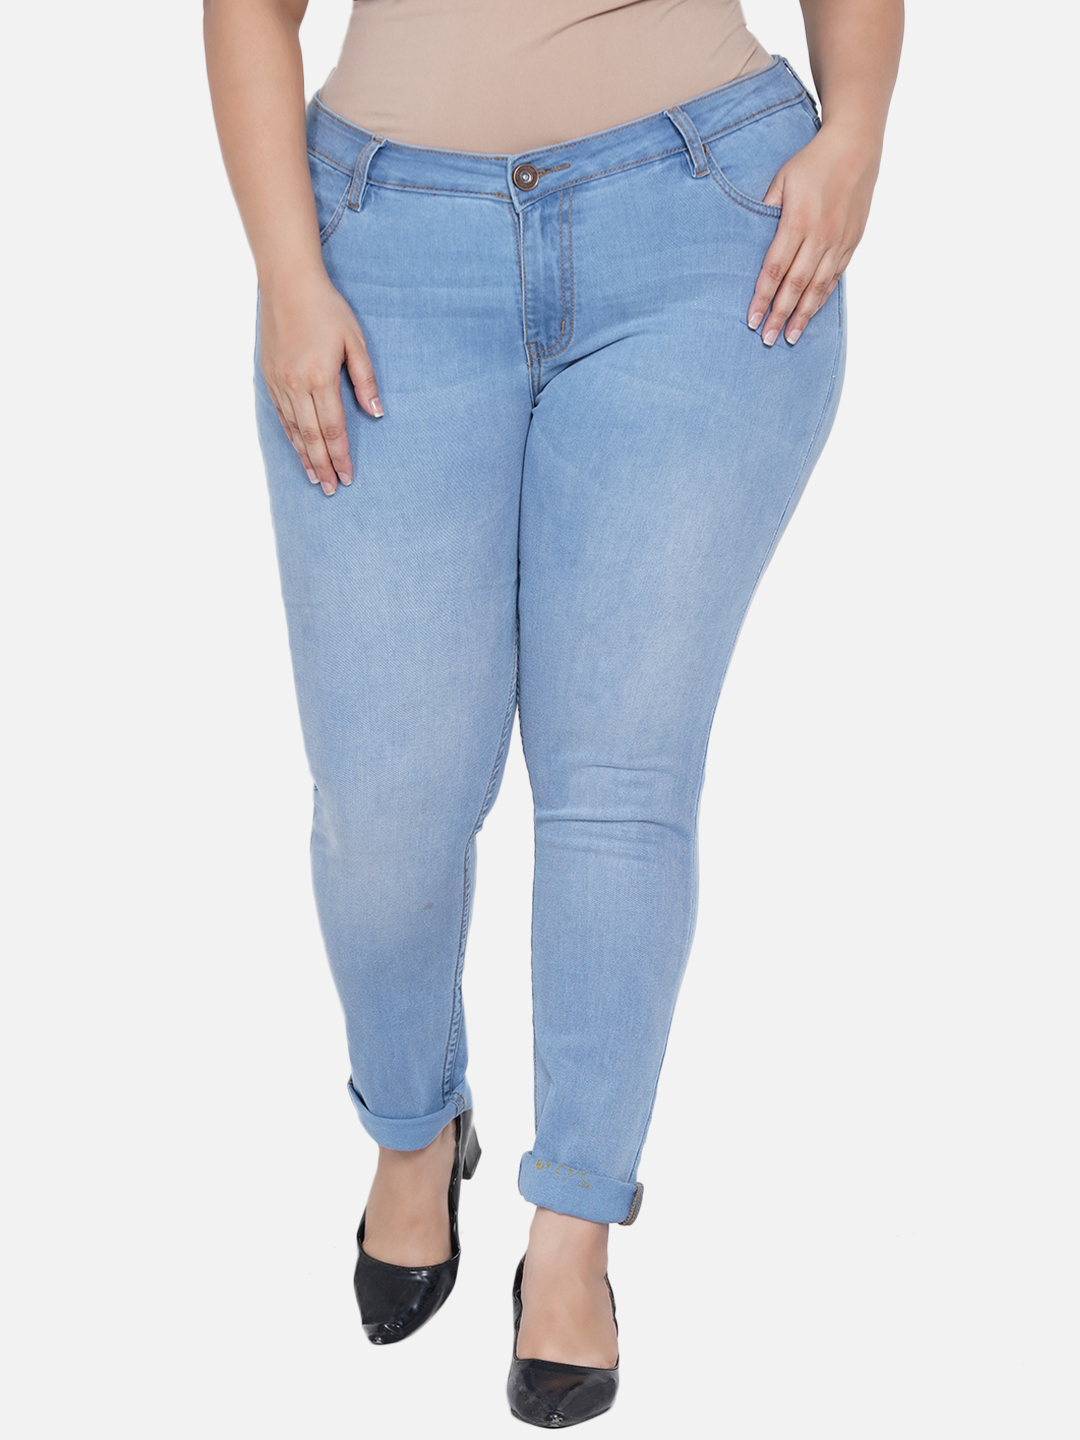 bottomwear_kiaahvi/jeans/KIAJ37/kiaj37-1.jpg